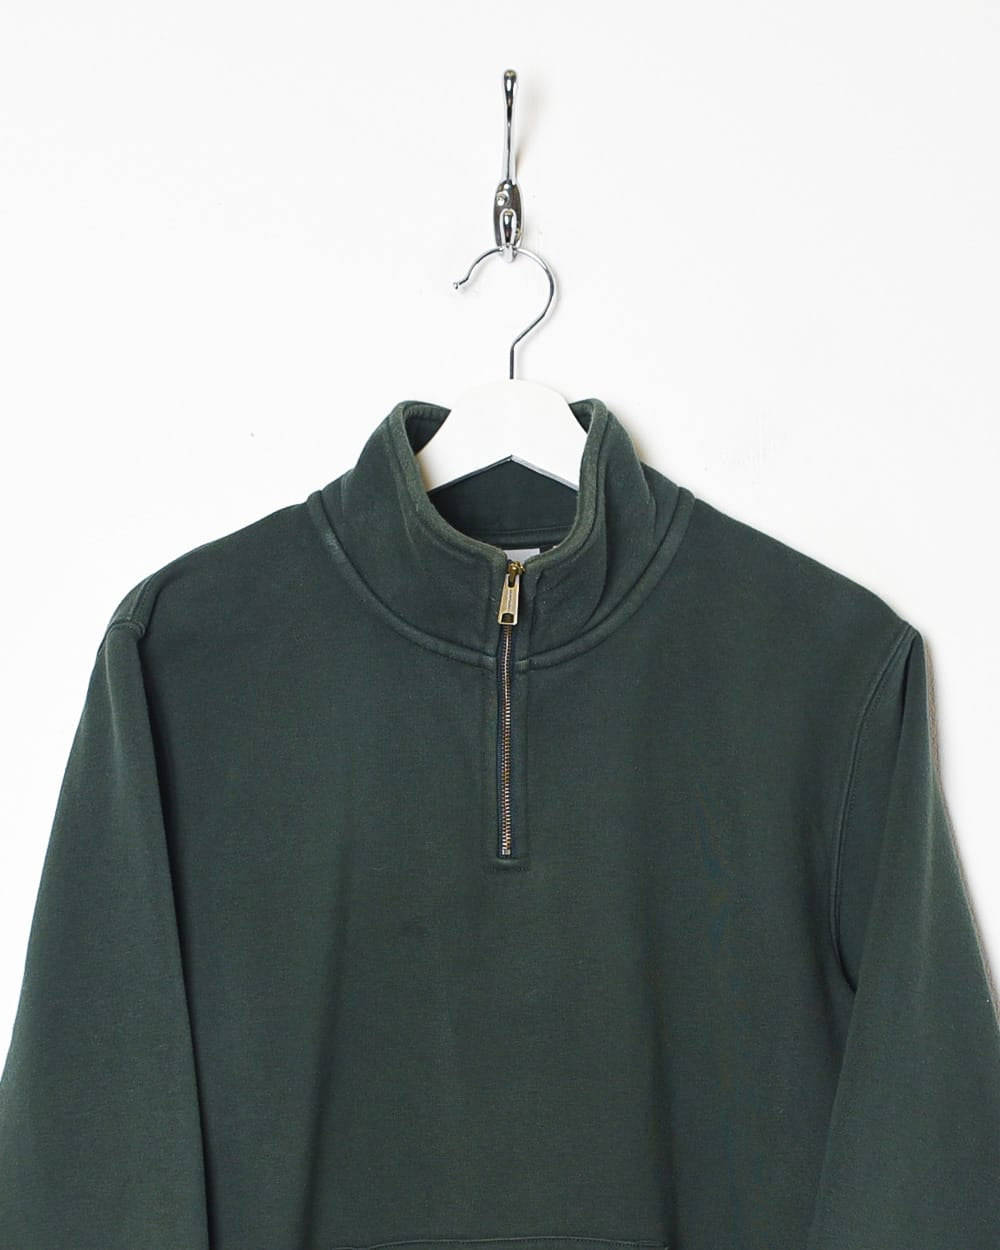 Green Carhartt 1/4 Zip Sweatshirt - Small